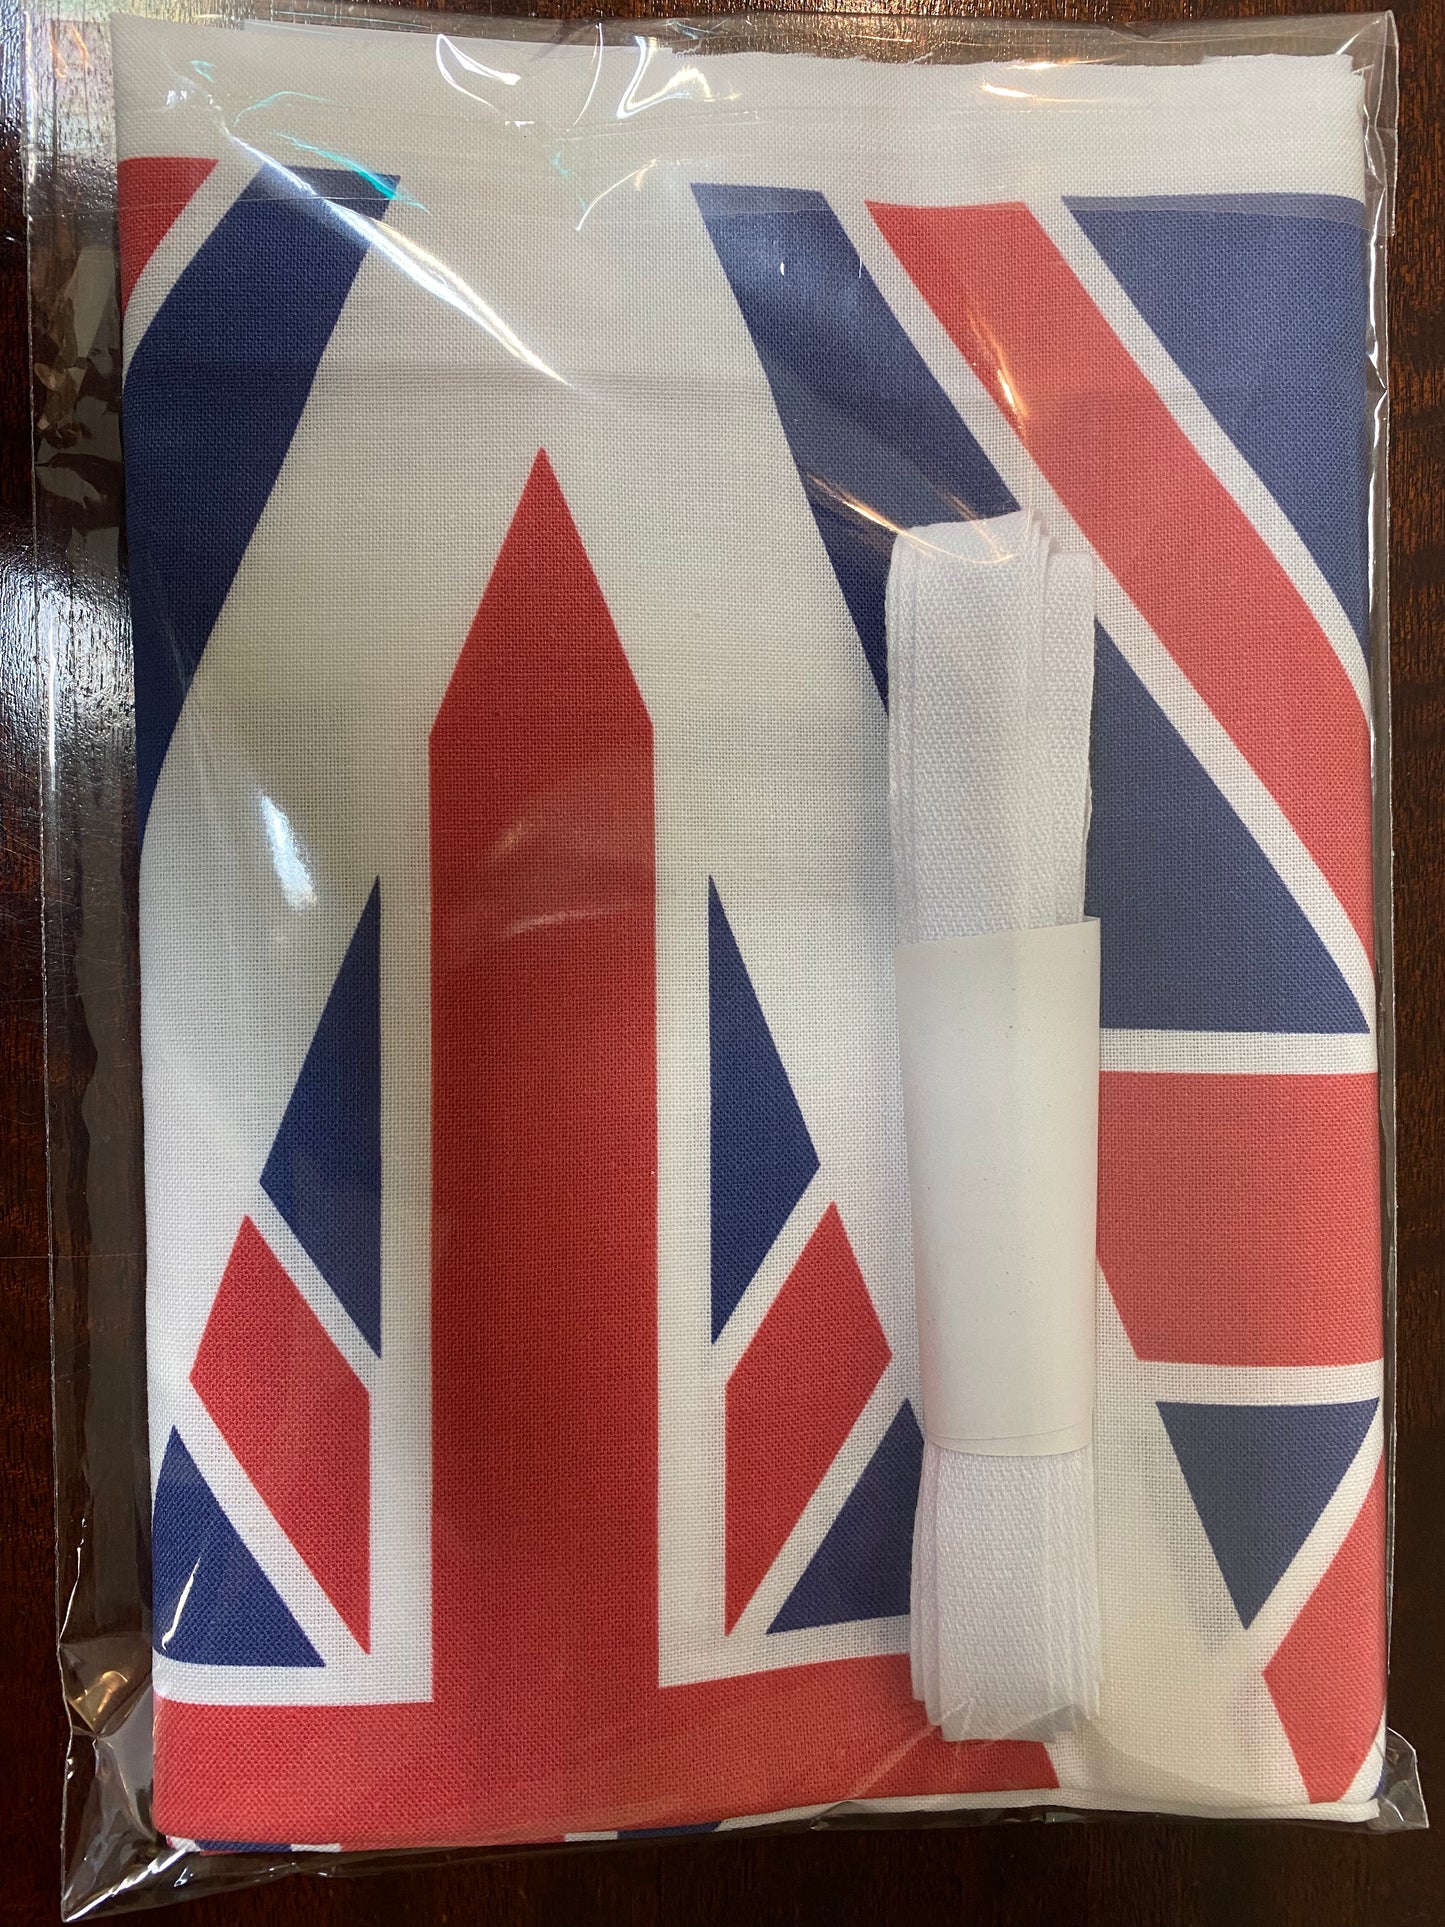 Union Jack DIY Bunting Pack - 5 metres - Make Your Own Bunting Kit!